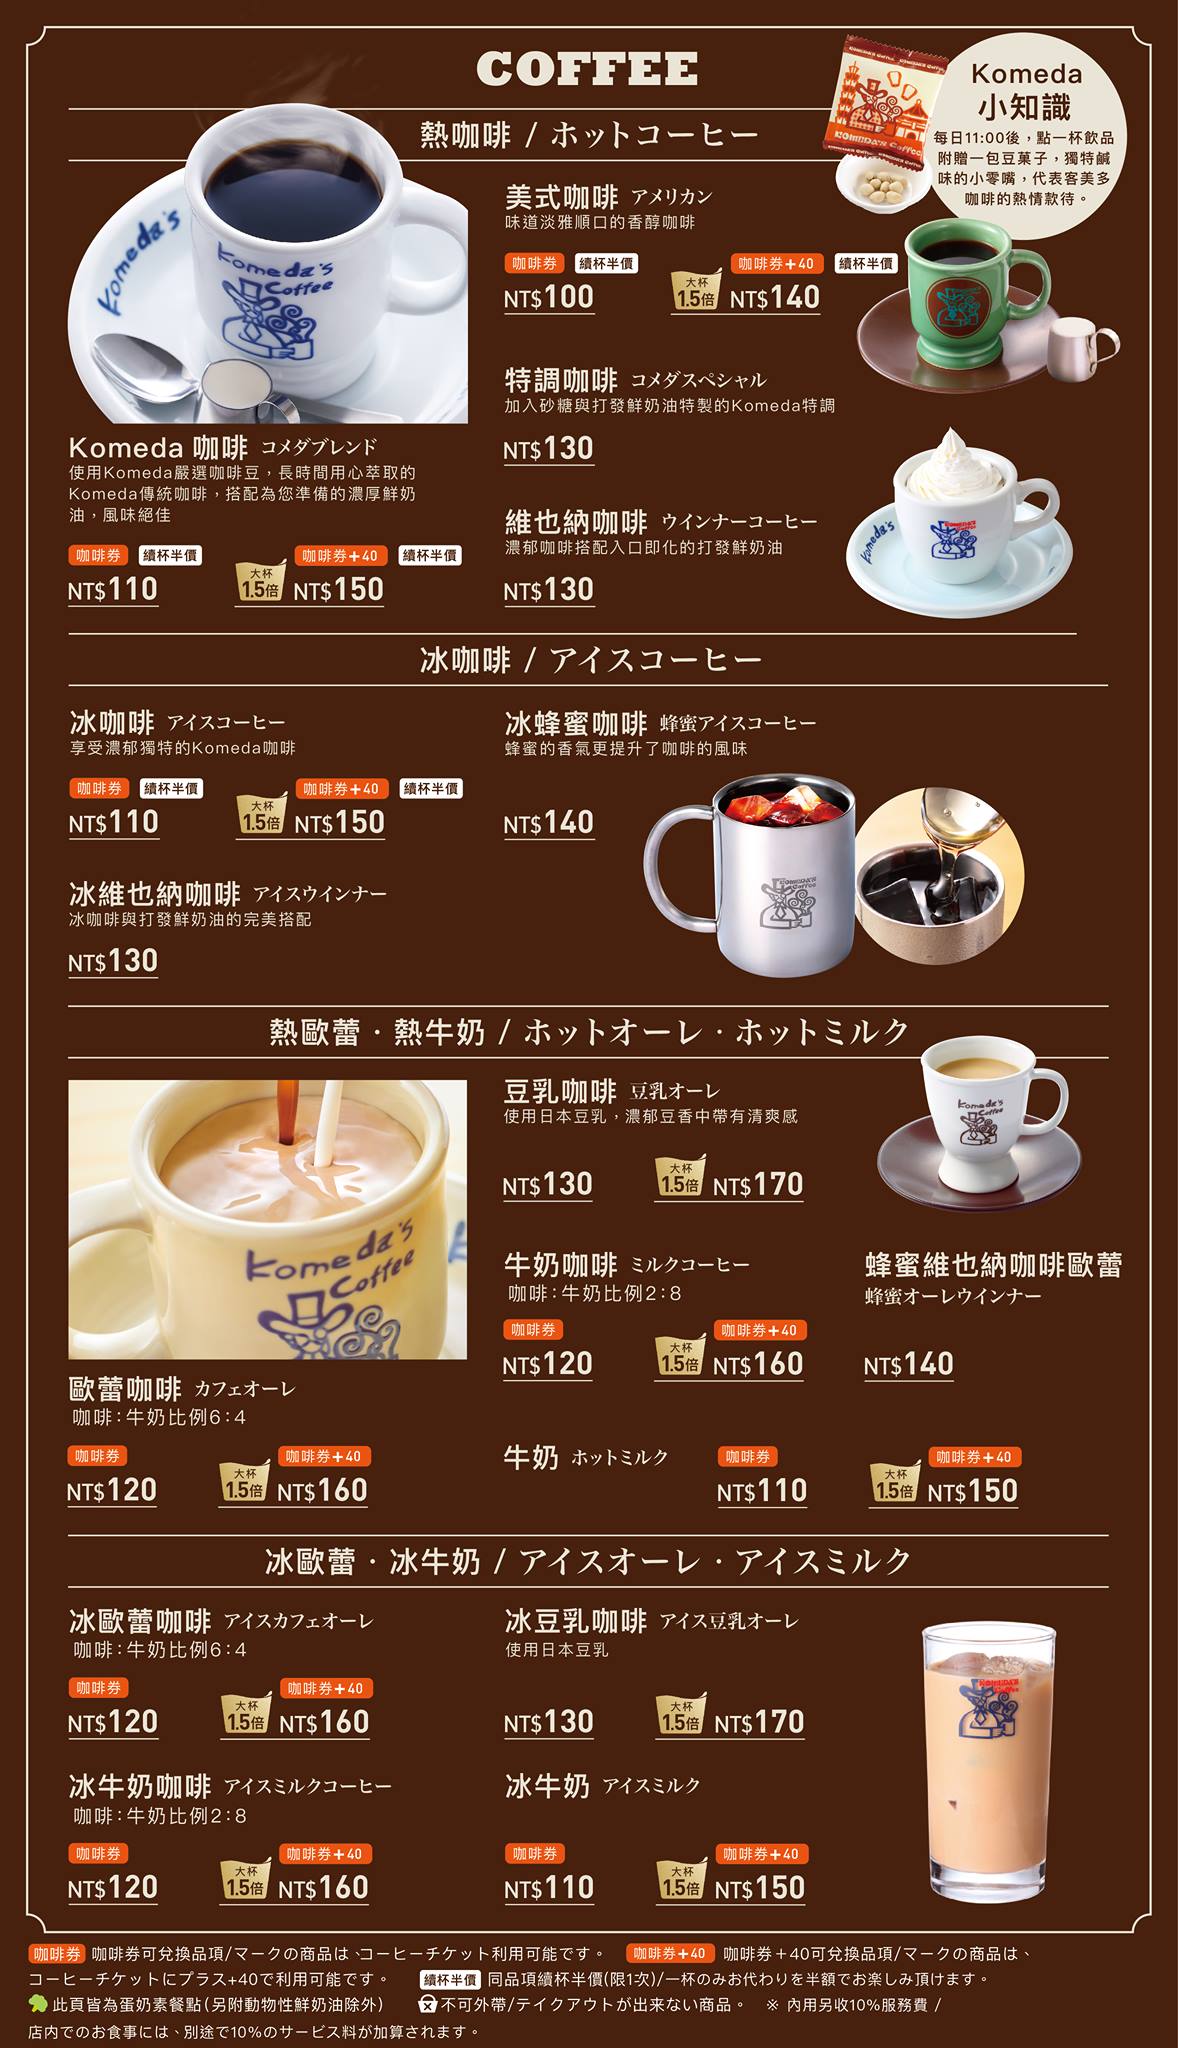 Komeda's Coffee 客美多咖啡菜單